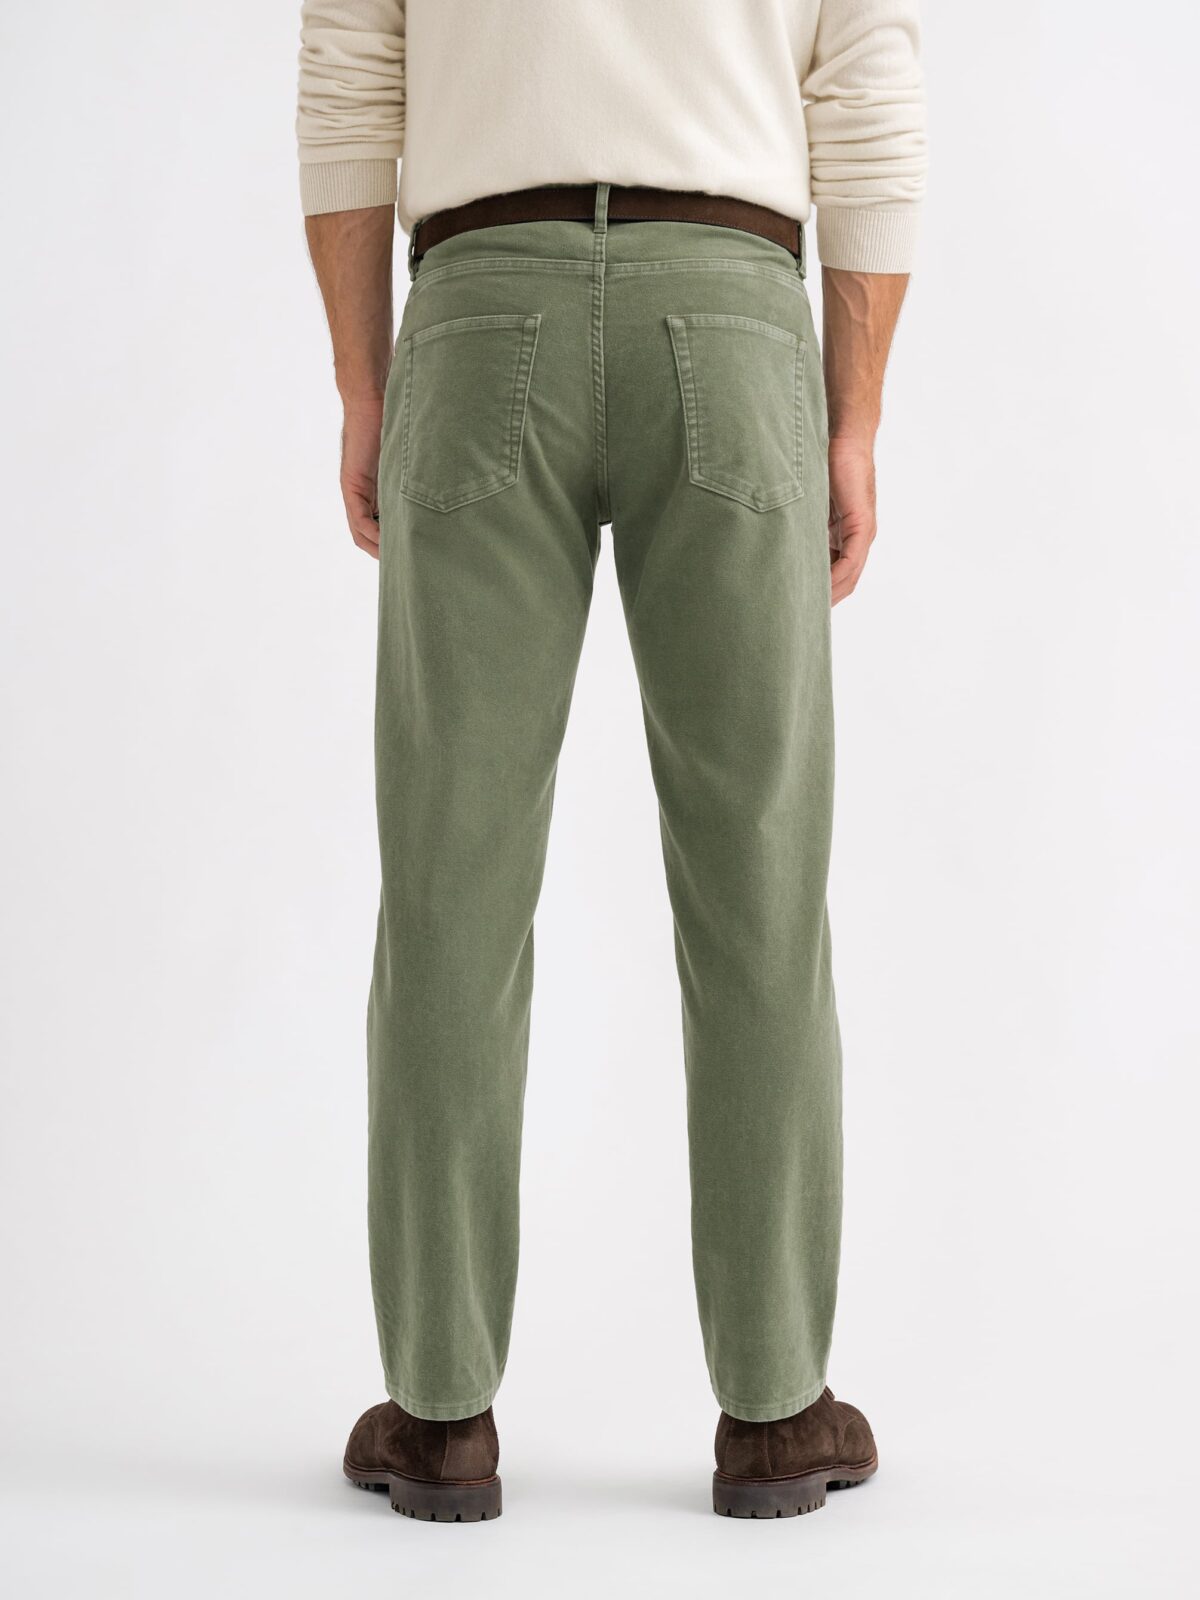 Men's Green Moleskin Pants